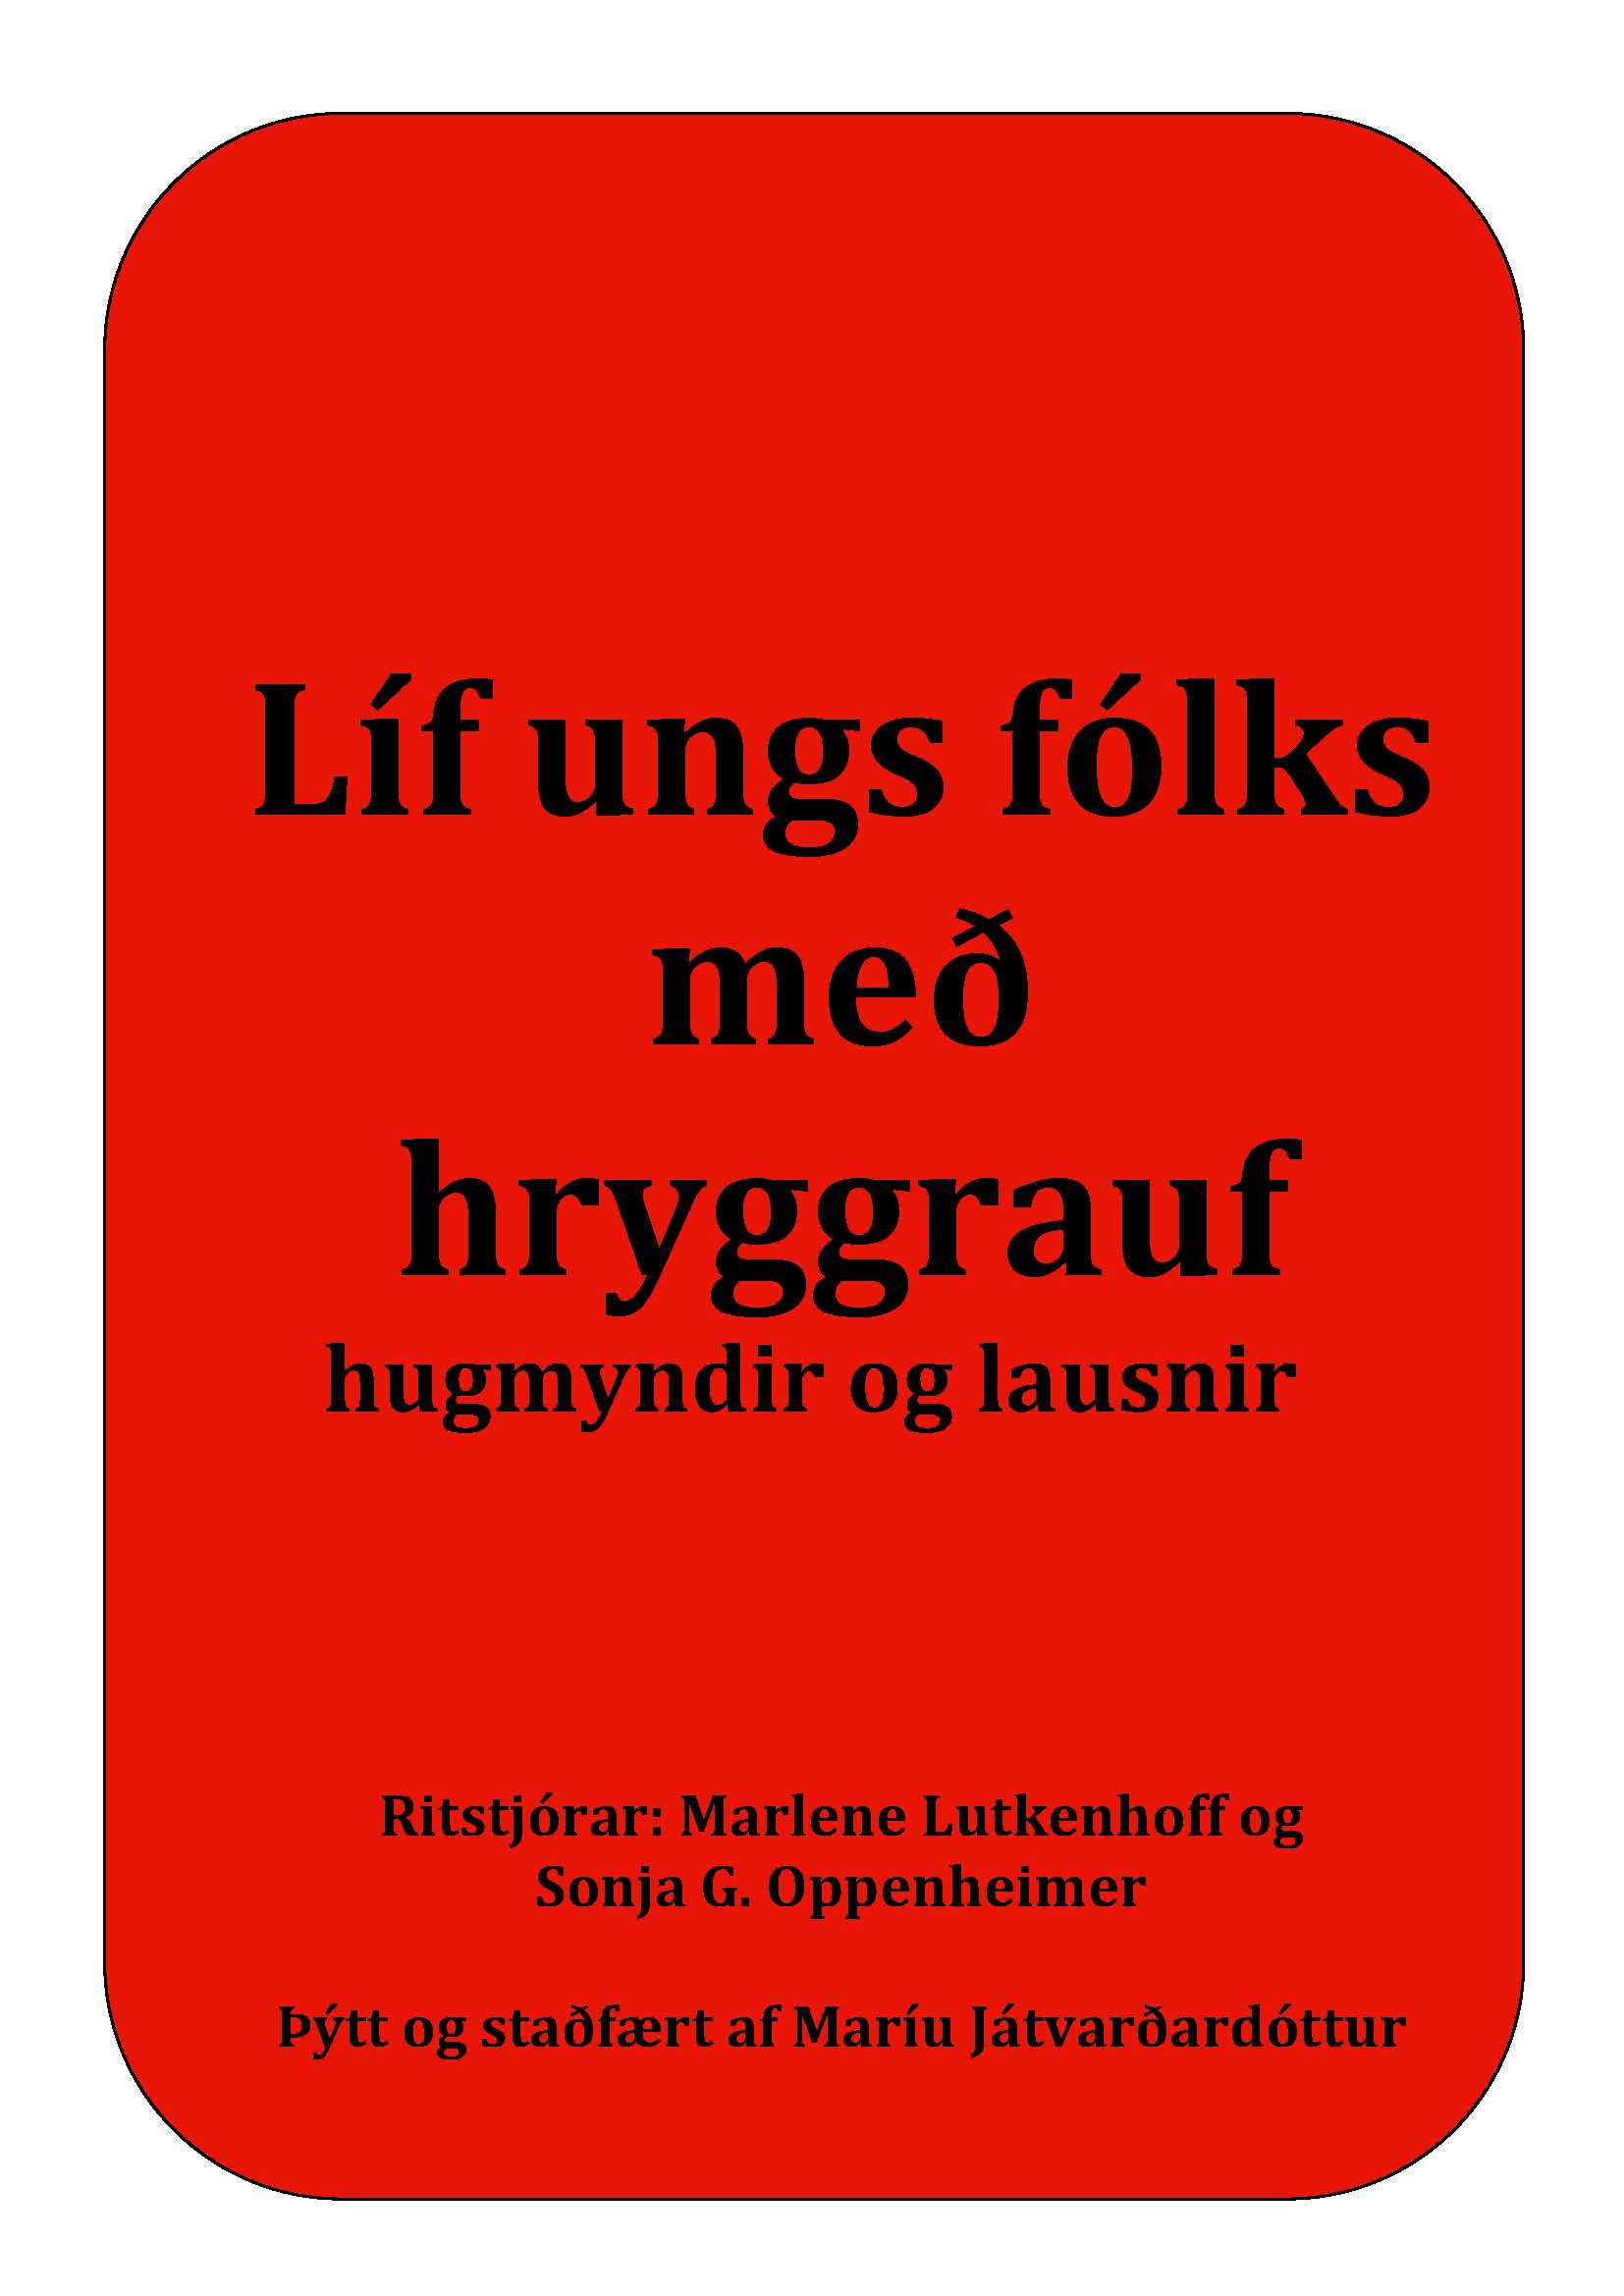 Lif-ungs-folks-med-hryggrauf-011211_Page_01